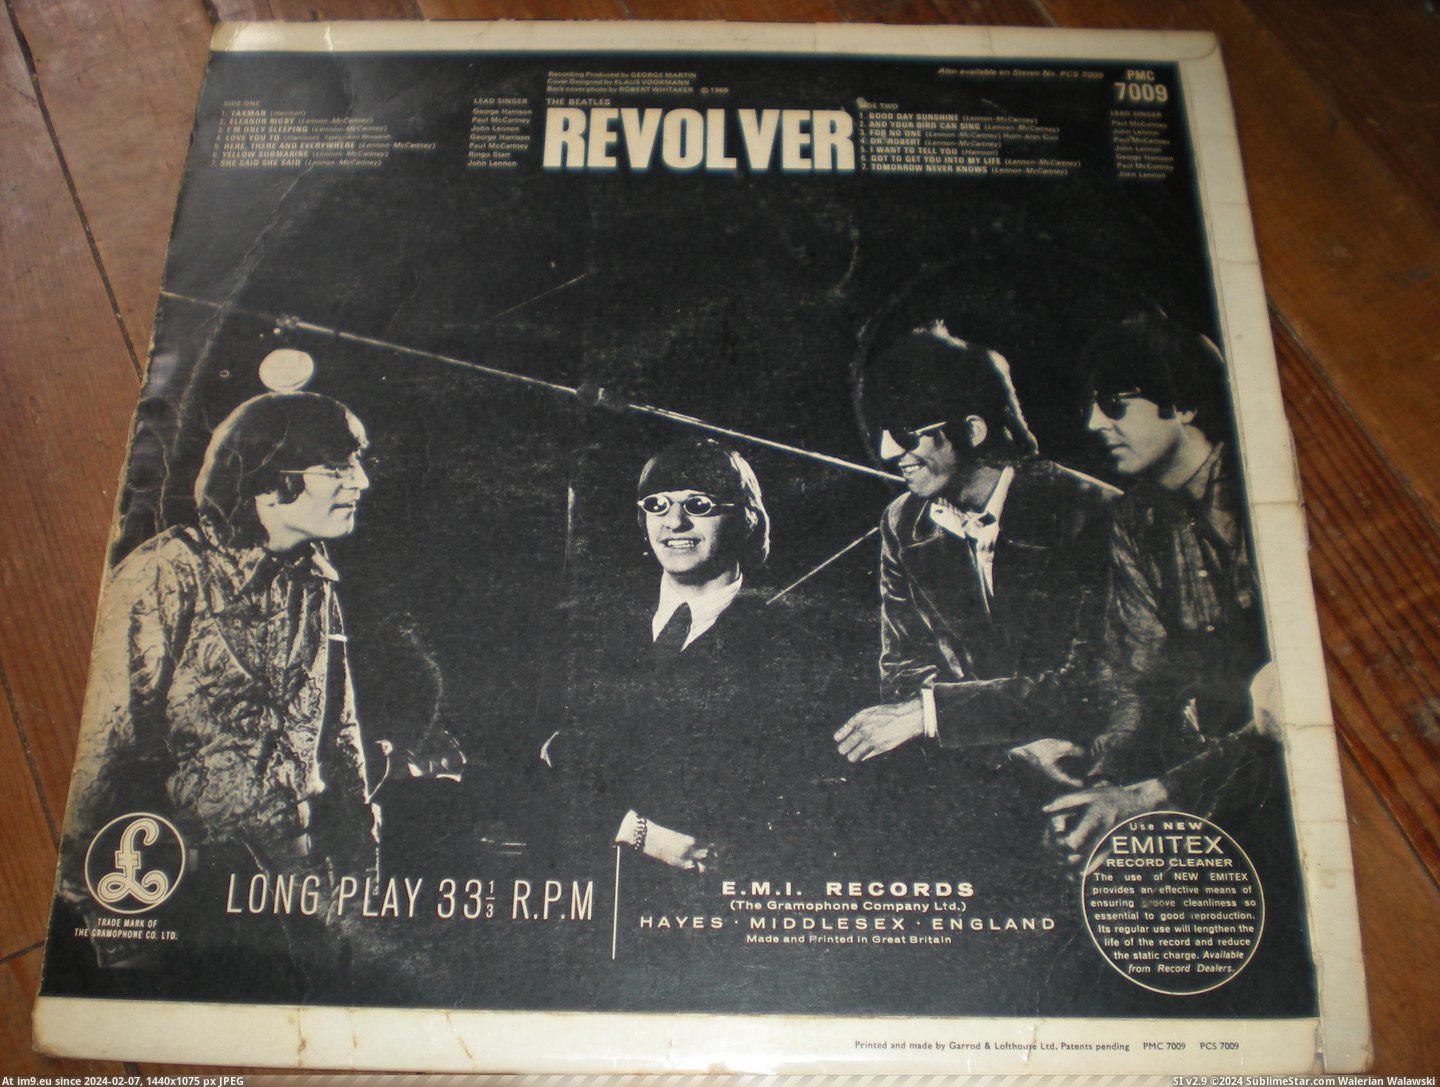  #Revolver  Revolver -2-3 6 Pic. (Изображение из альбом new 1))